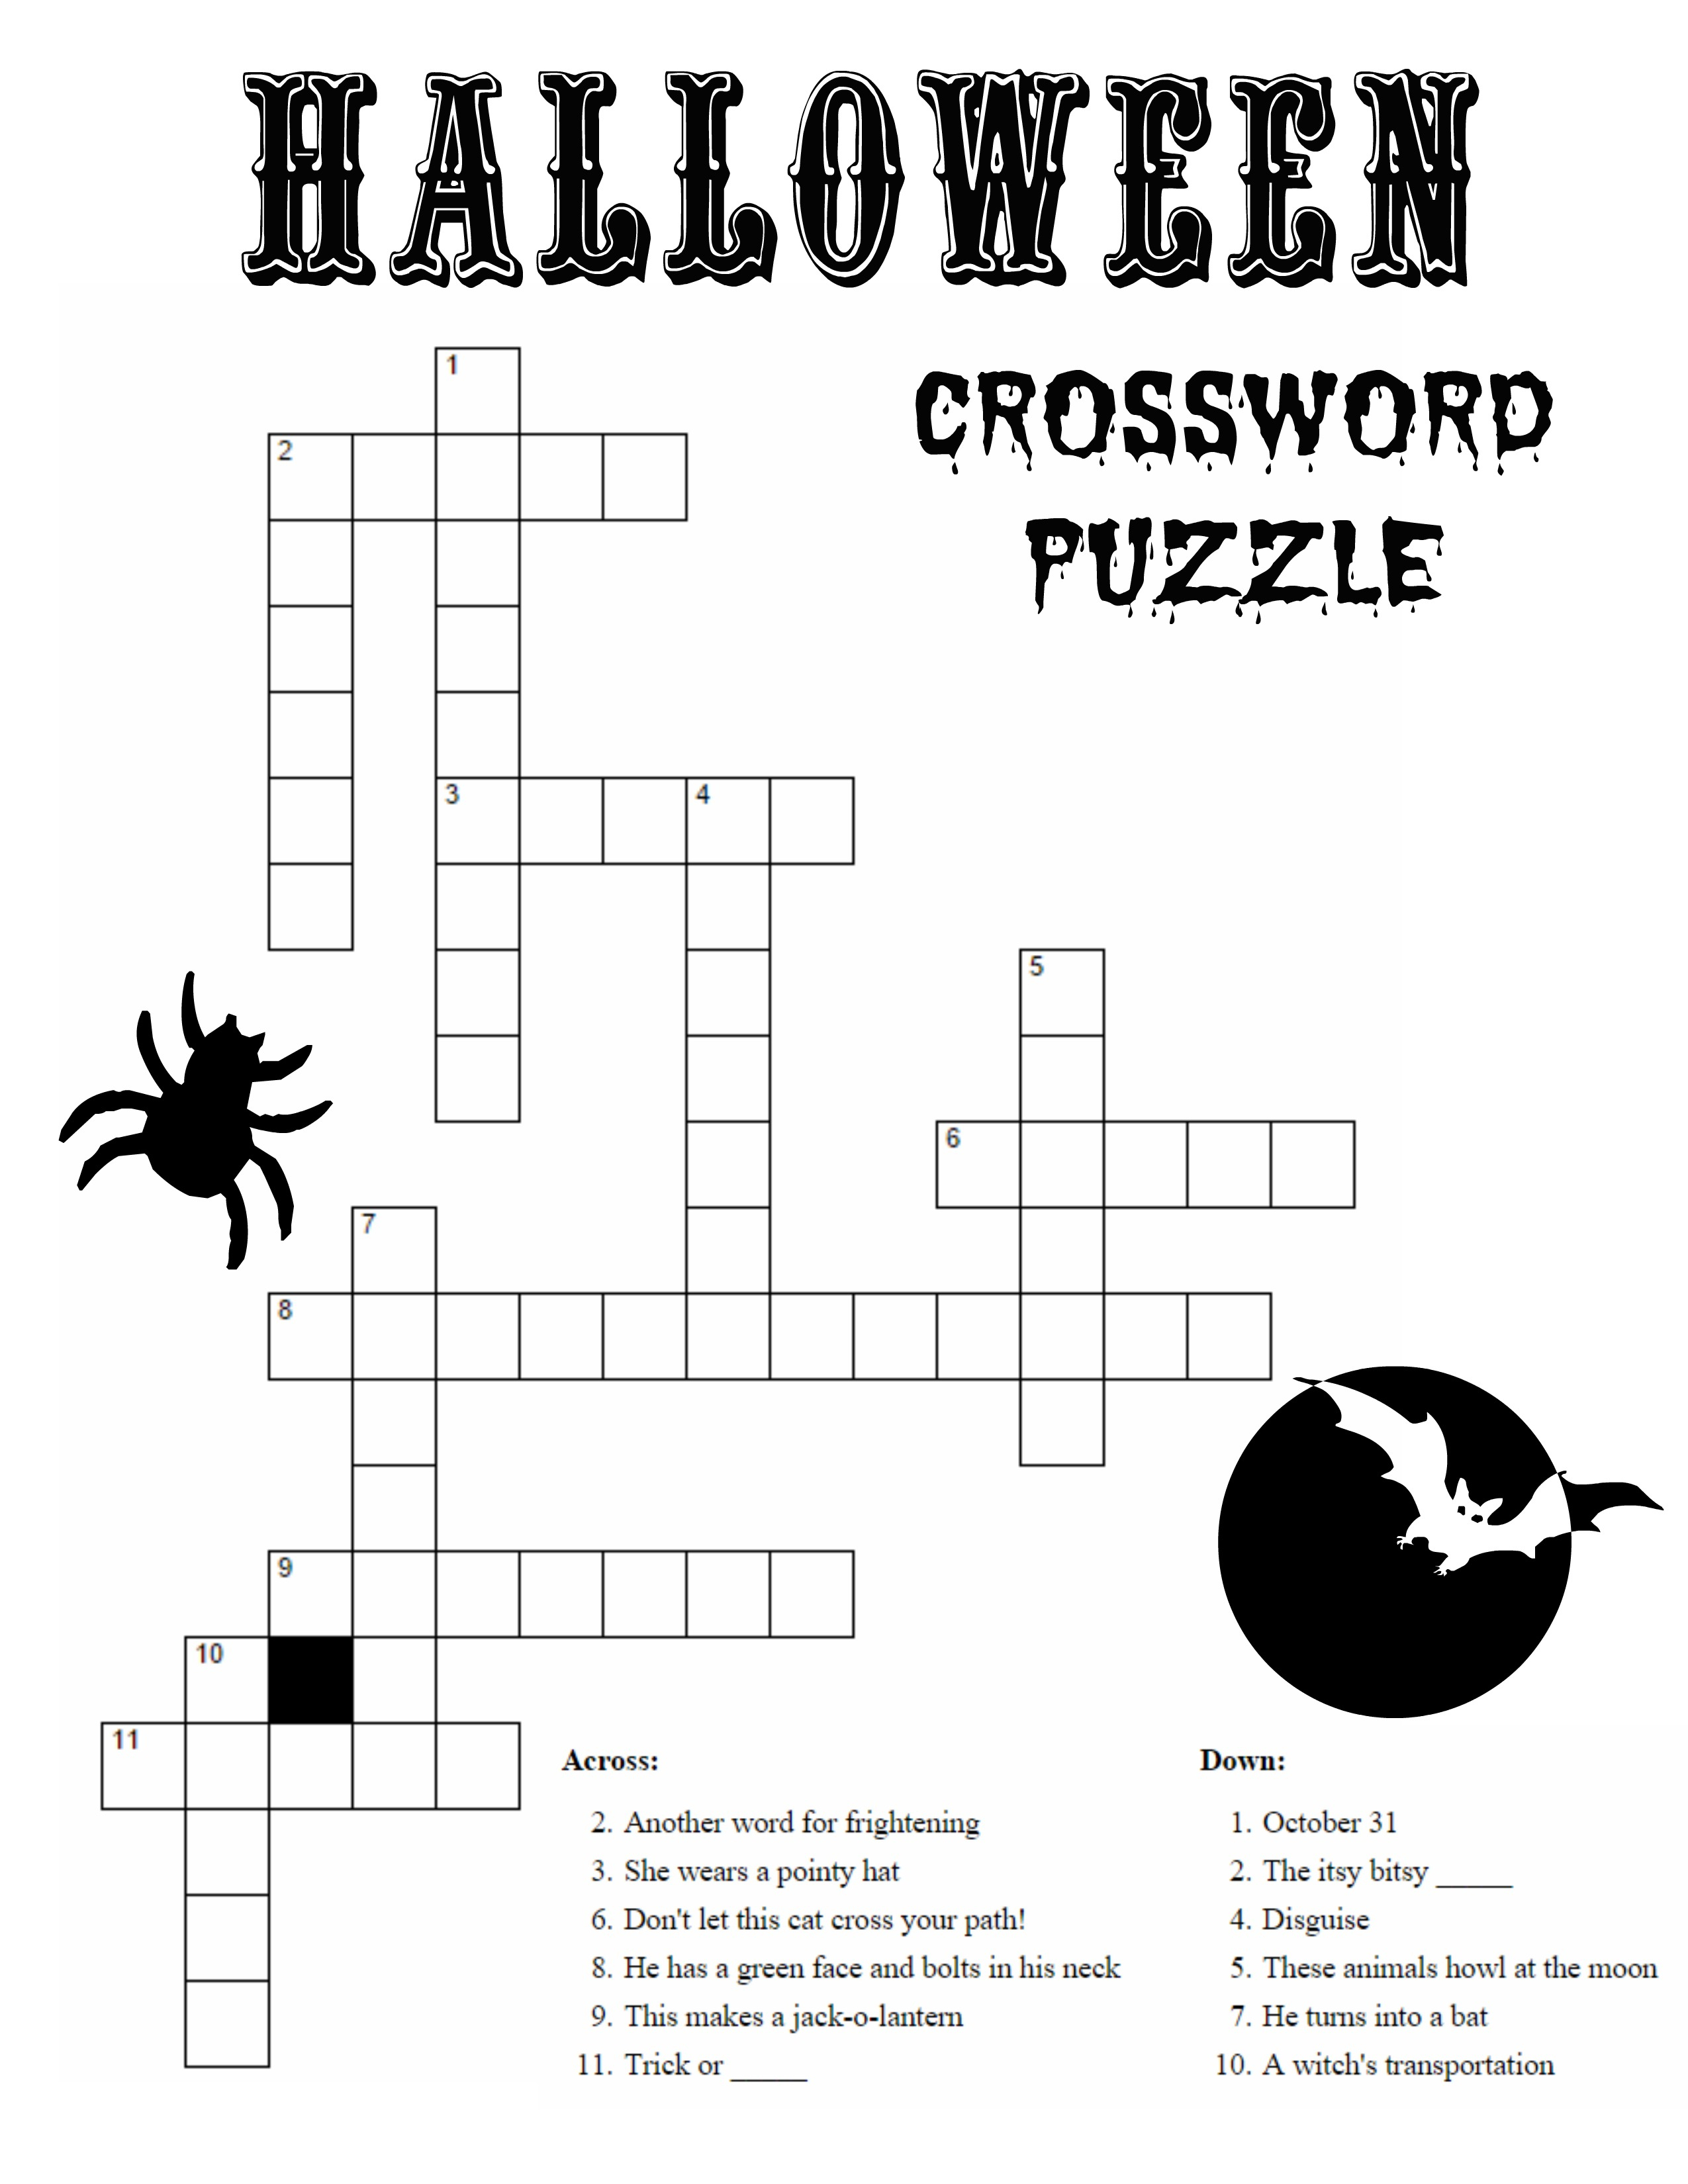 Halloween Crossword Free Printable paringinst2